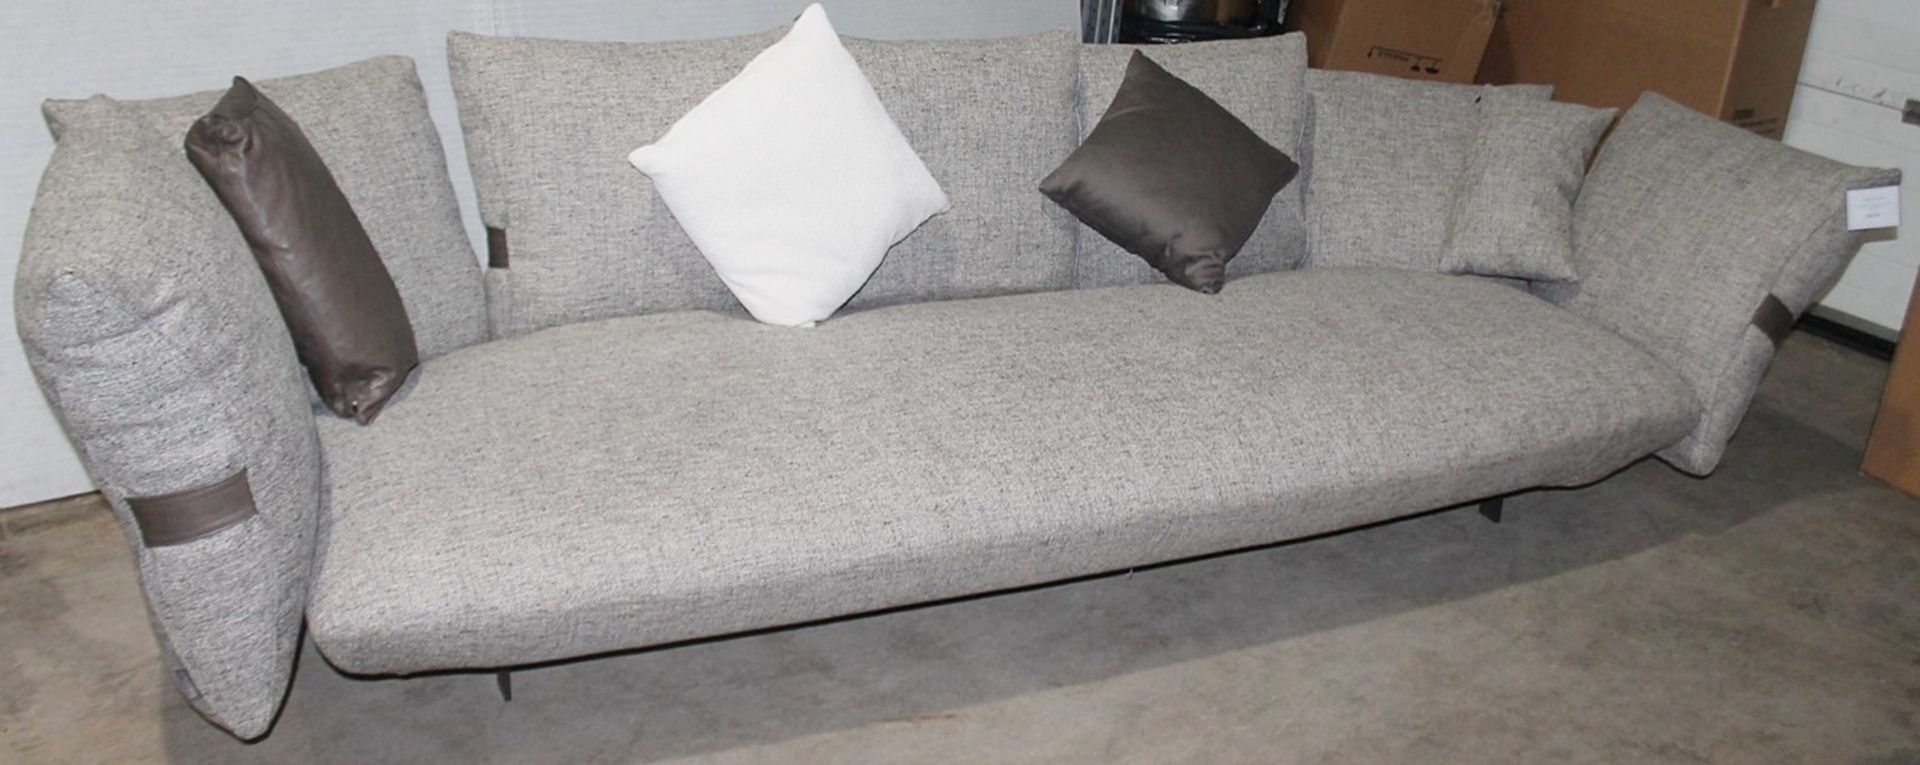 1 x ARKETIPO 'Smooth Operator' Luxury 7-Cushion / 3-Seater Sofa - Original Price £9,107 - Image 3 of 11